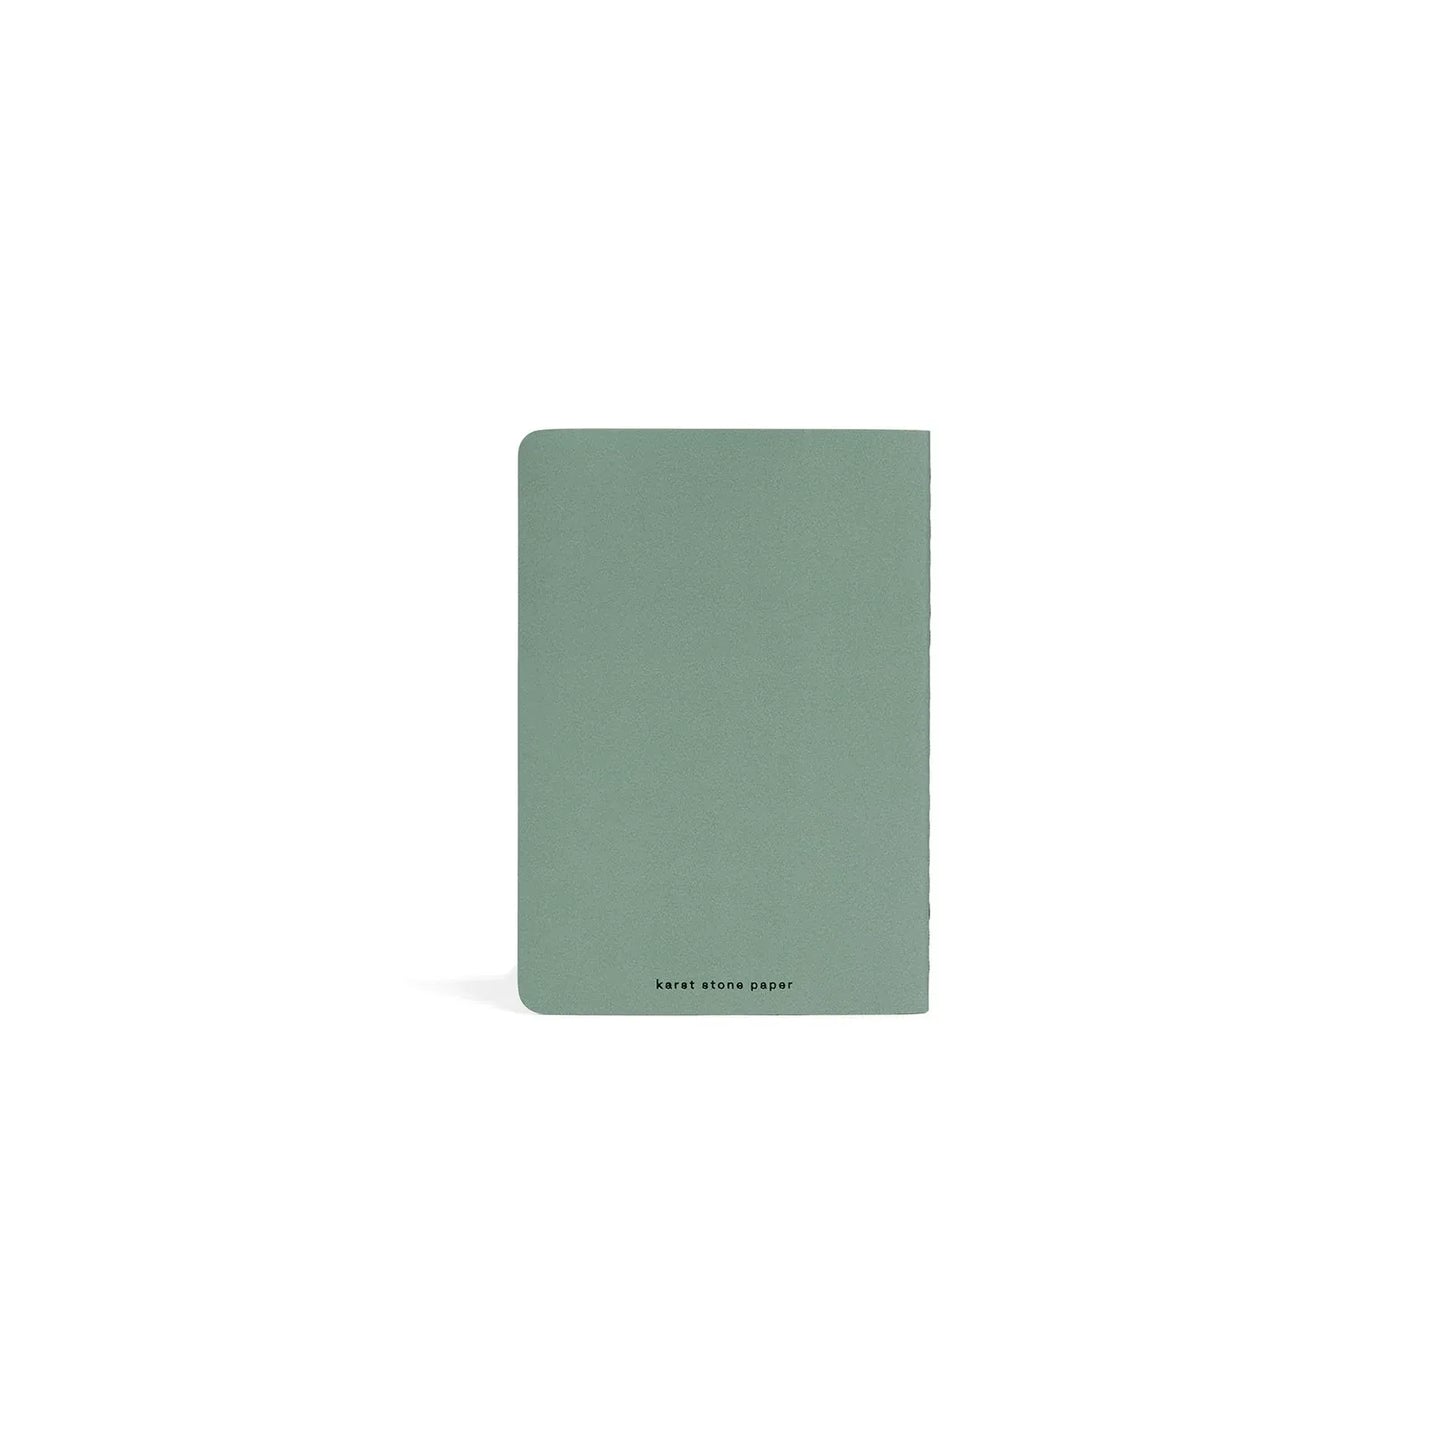 Karst Pocket Journal A6 – Eukalyptus (leer)